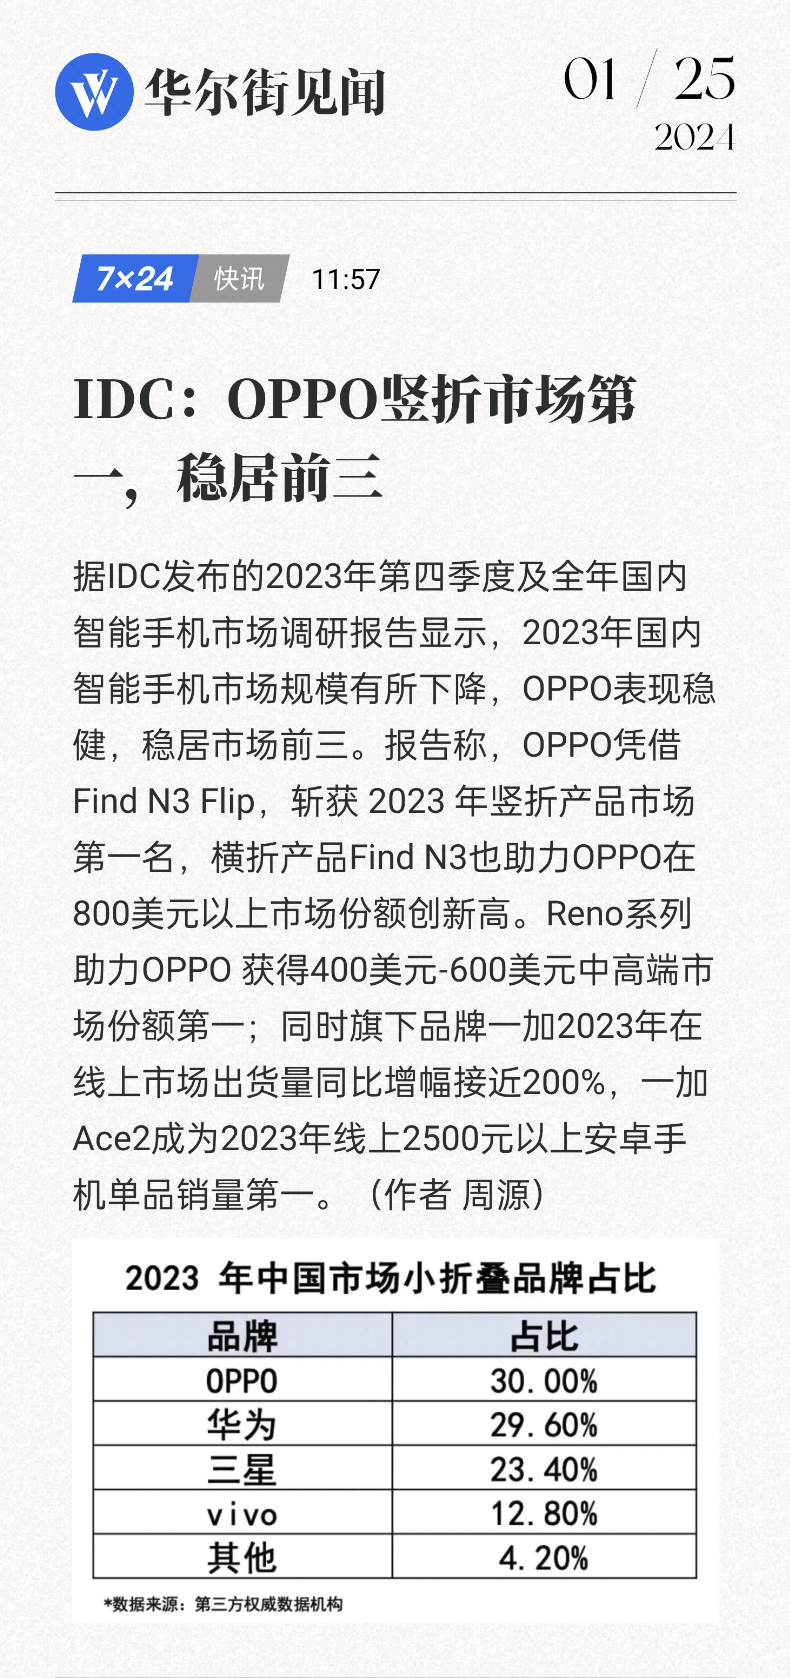 OPPO Folding Phone Sales